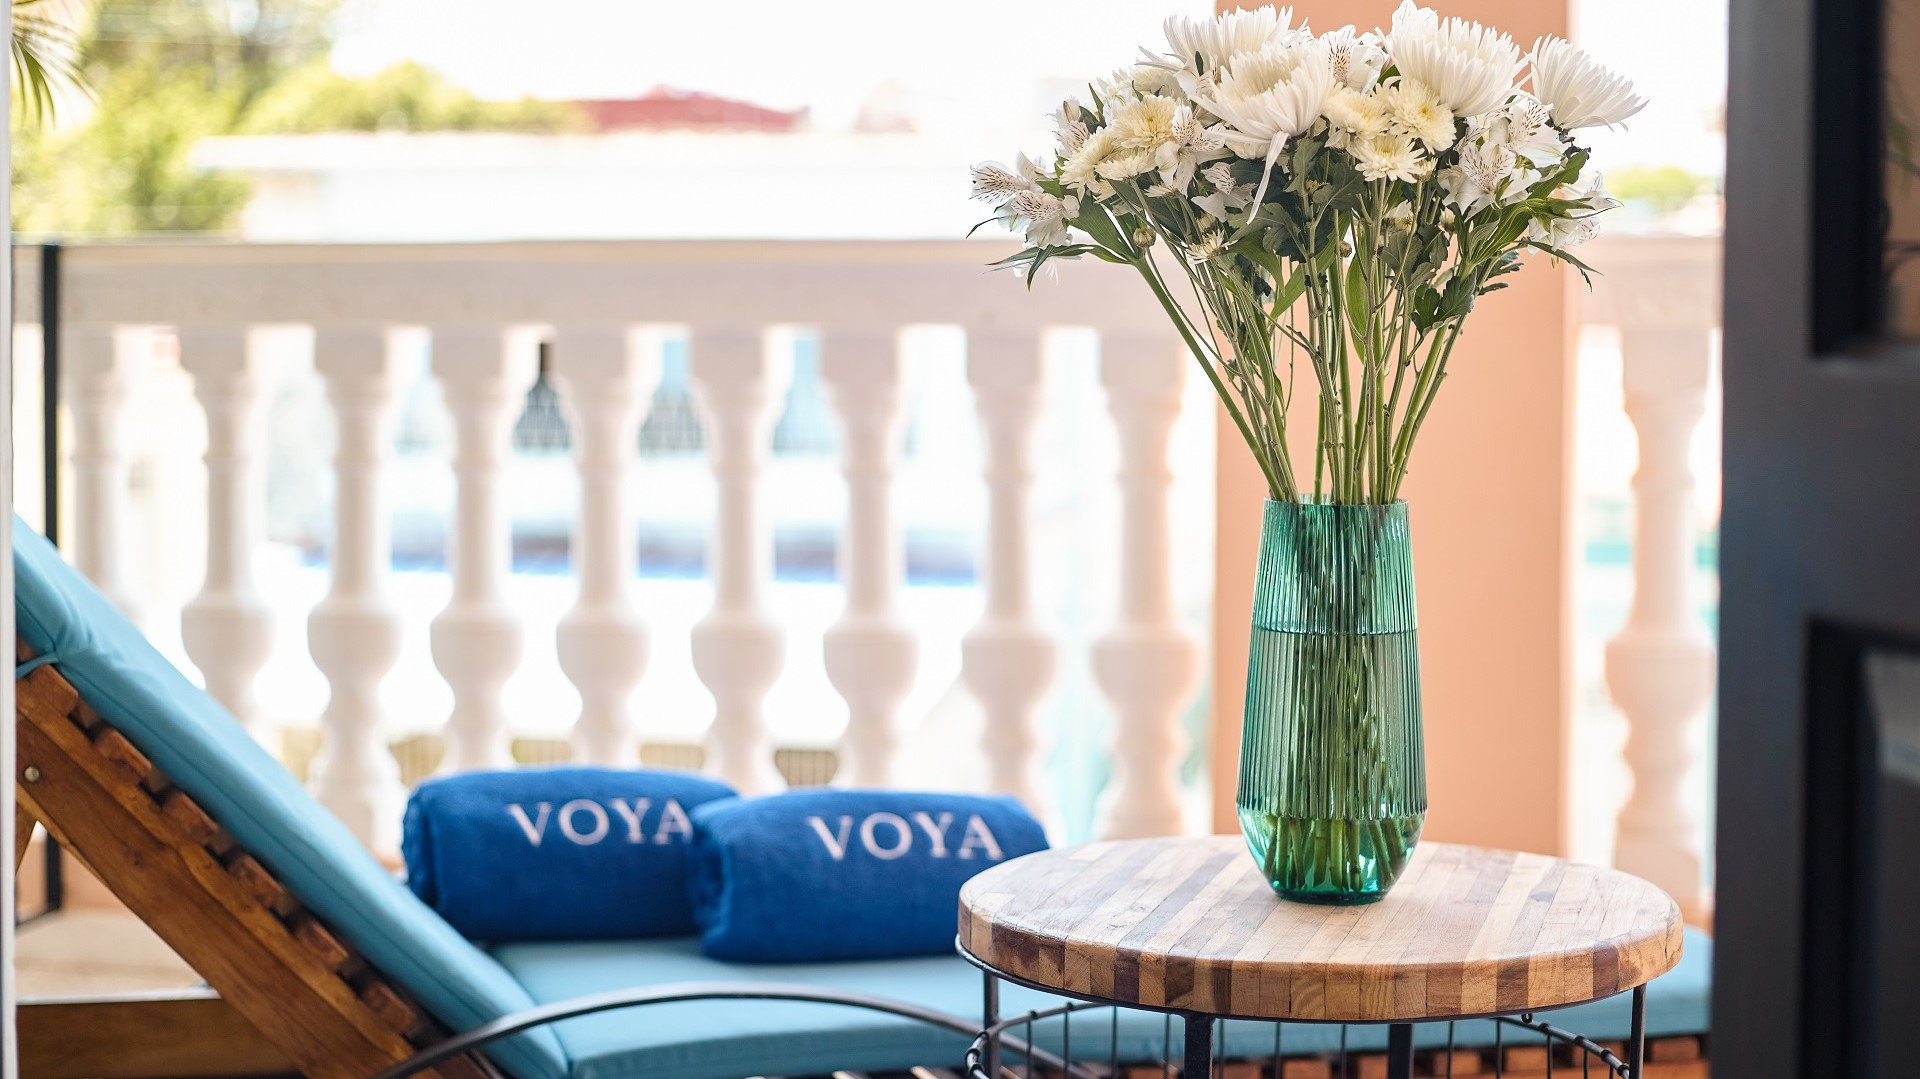 A particular atmosphere - Voya Boutique - Luxury hotel in Havana – Caribbean Tours